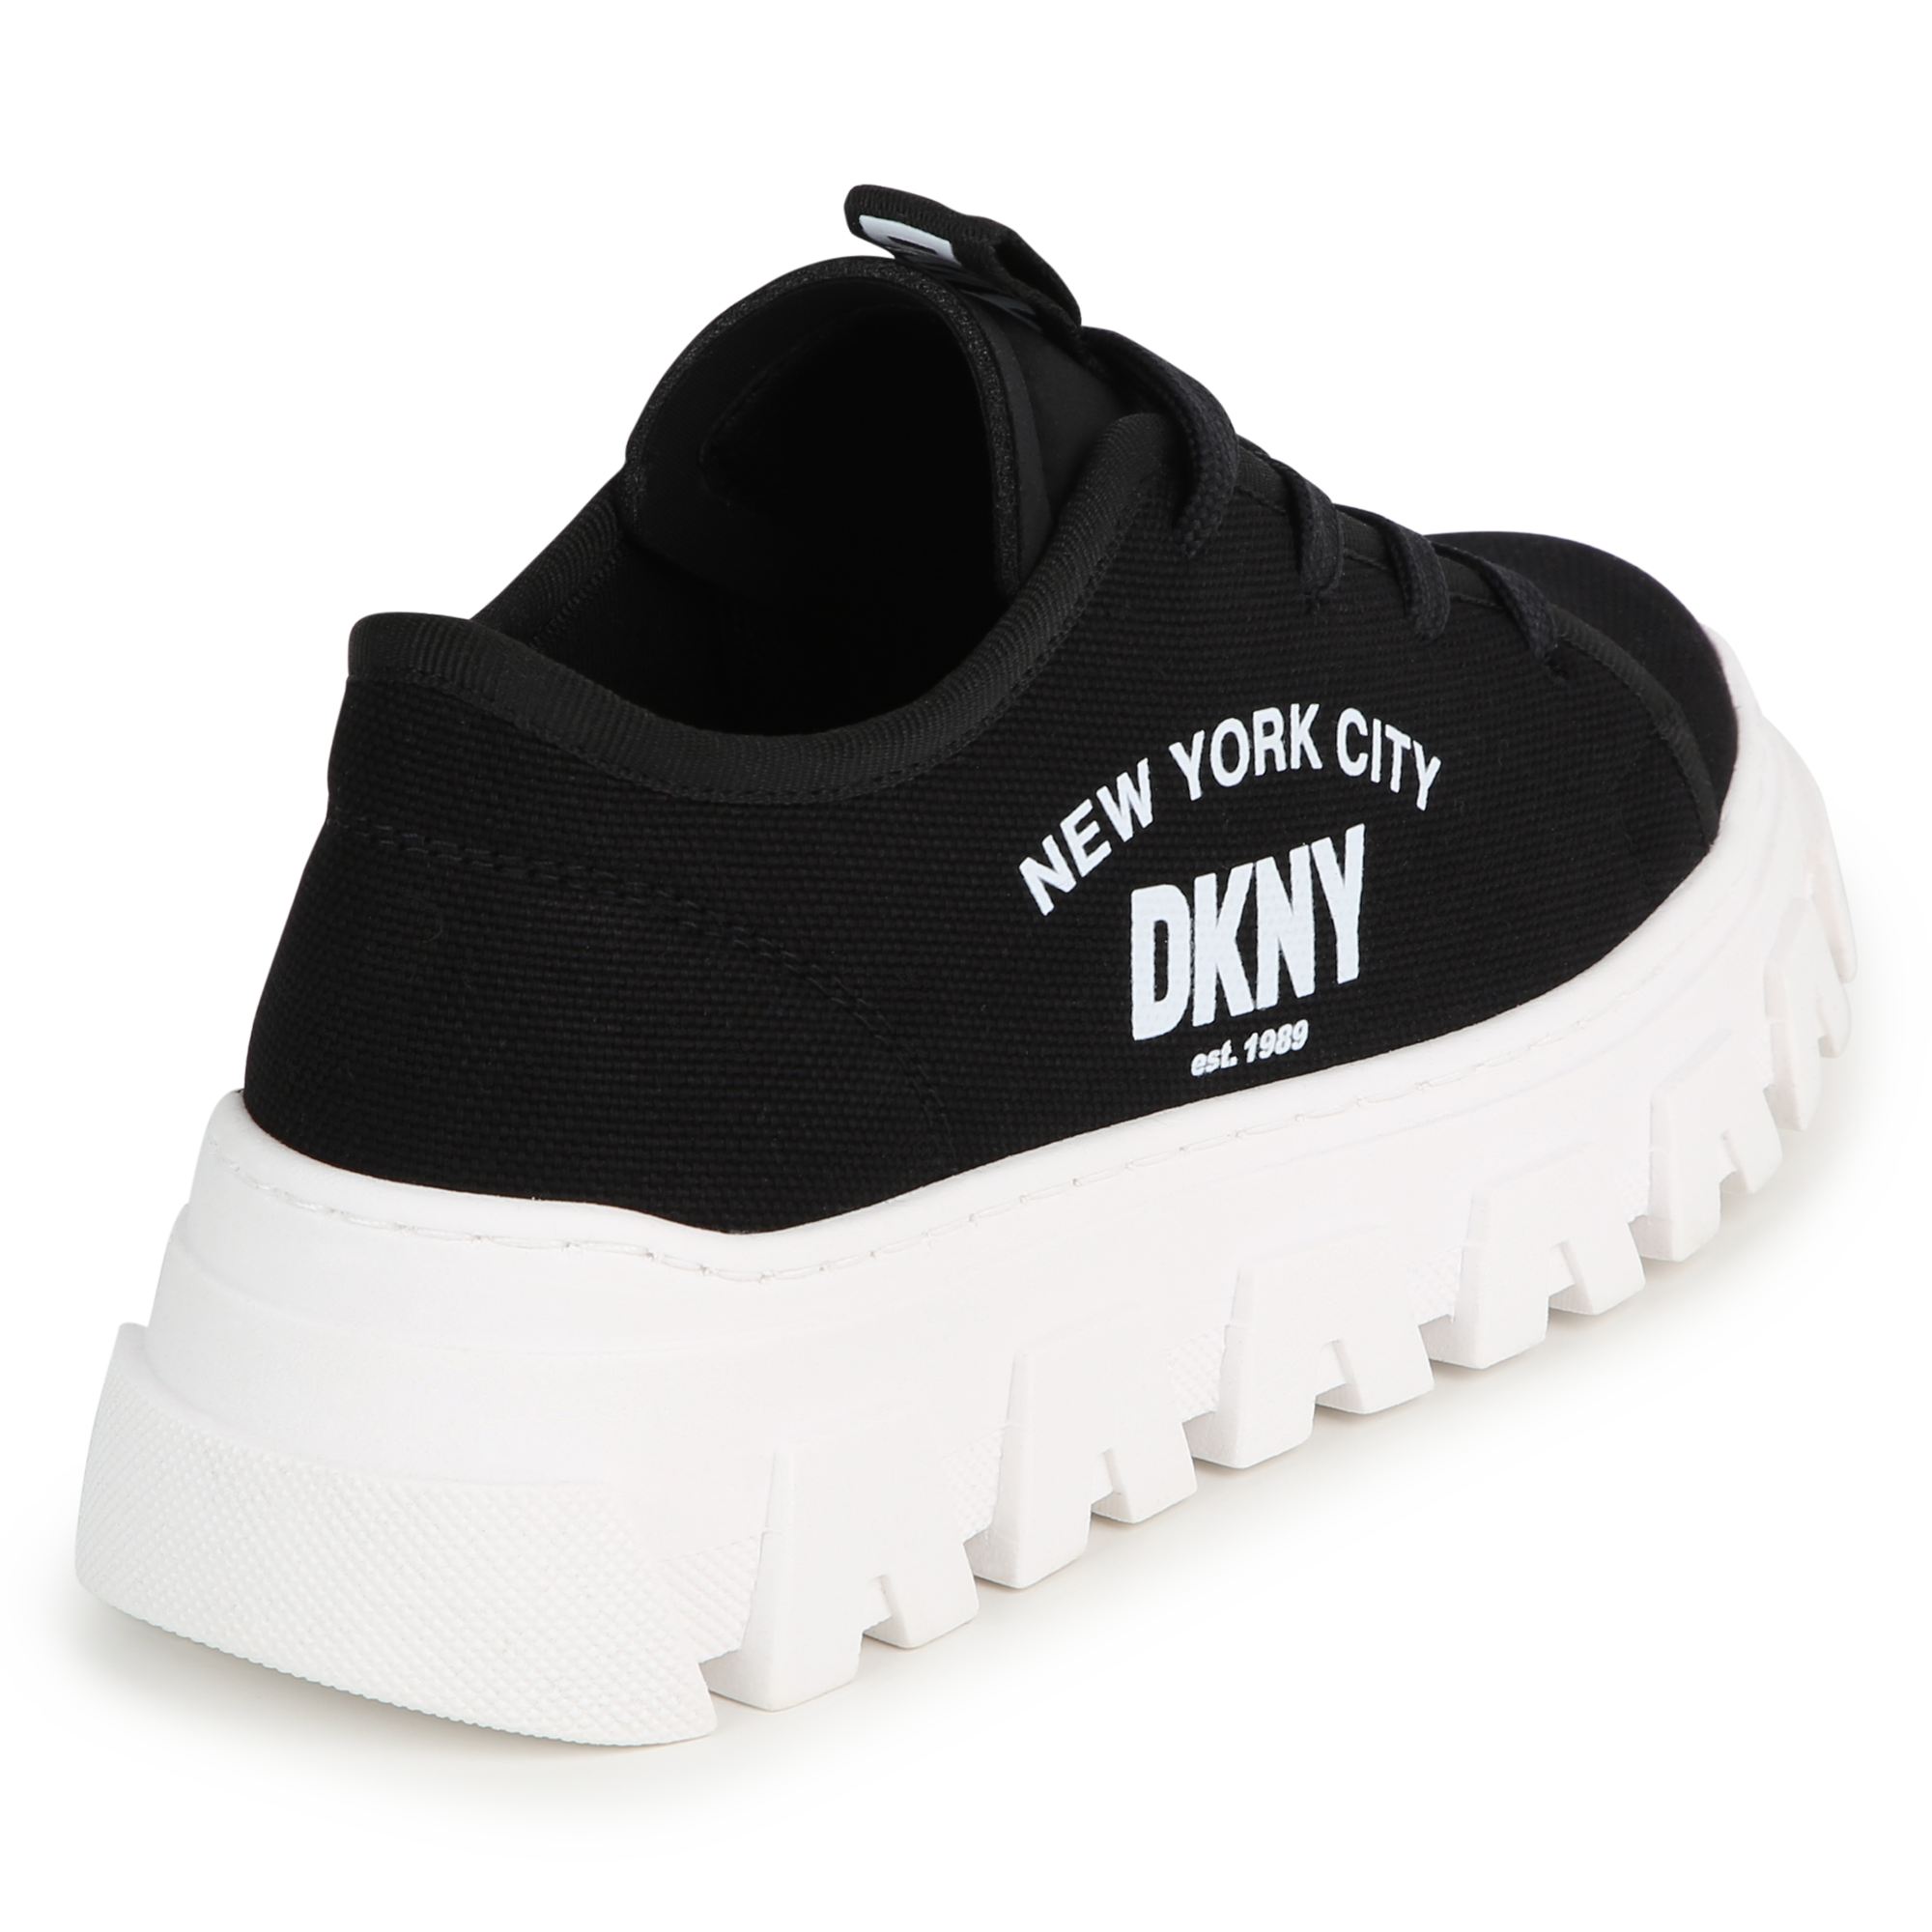 DKNY Cosmos Wedge Sneaker Women's Fashion Sneakers Black Size 6 M -  Walmart.com